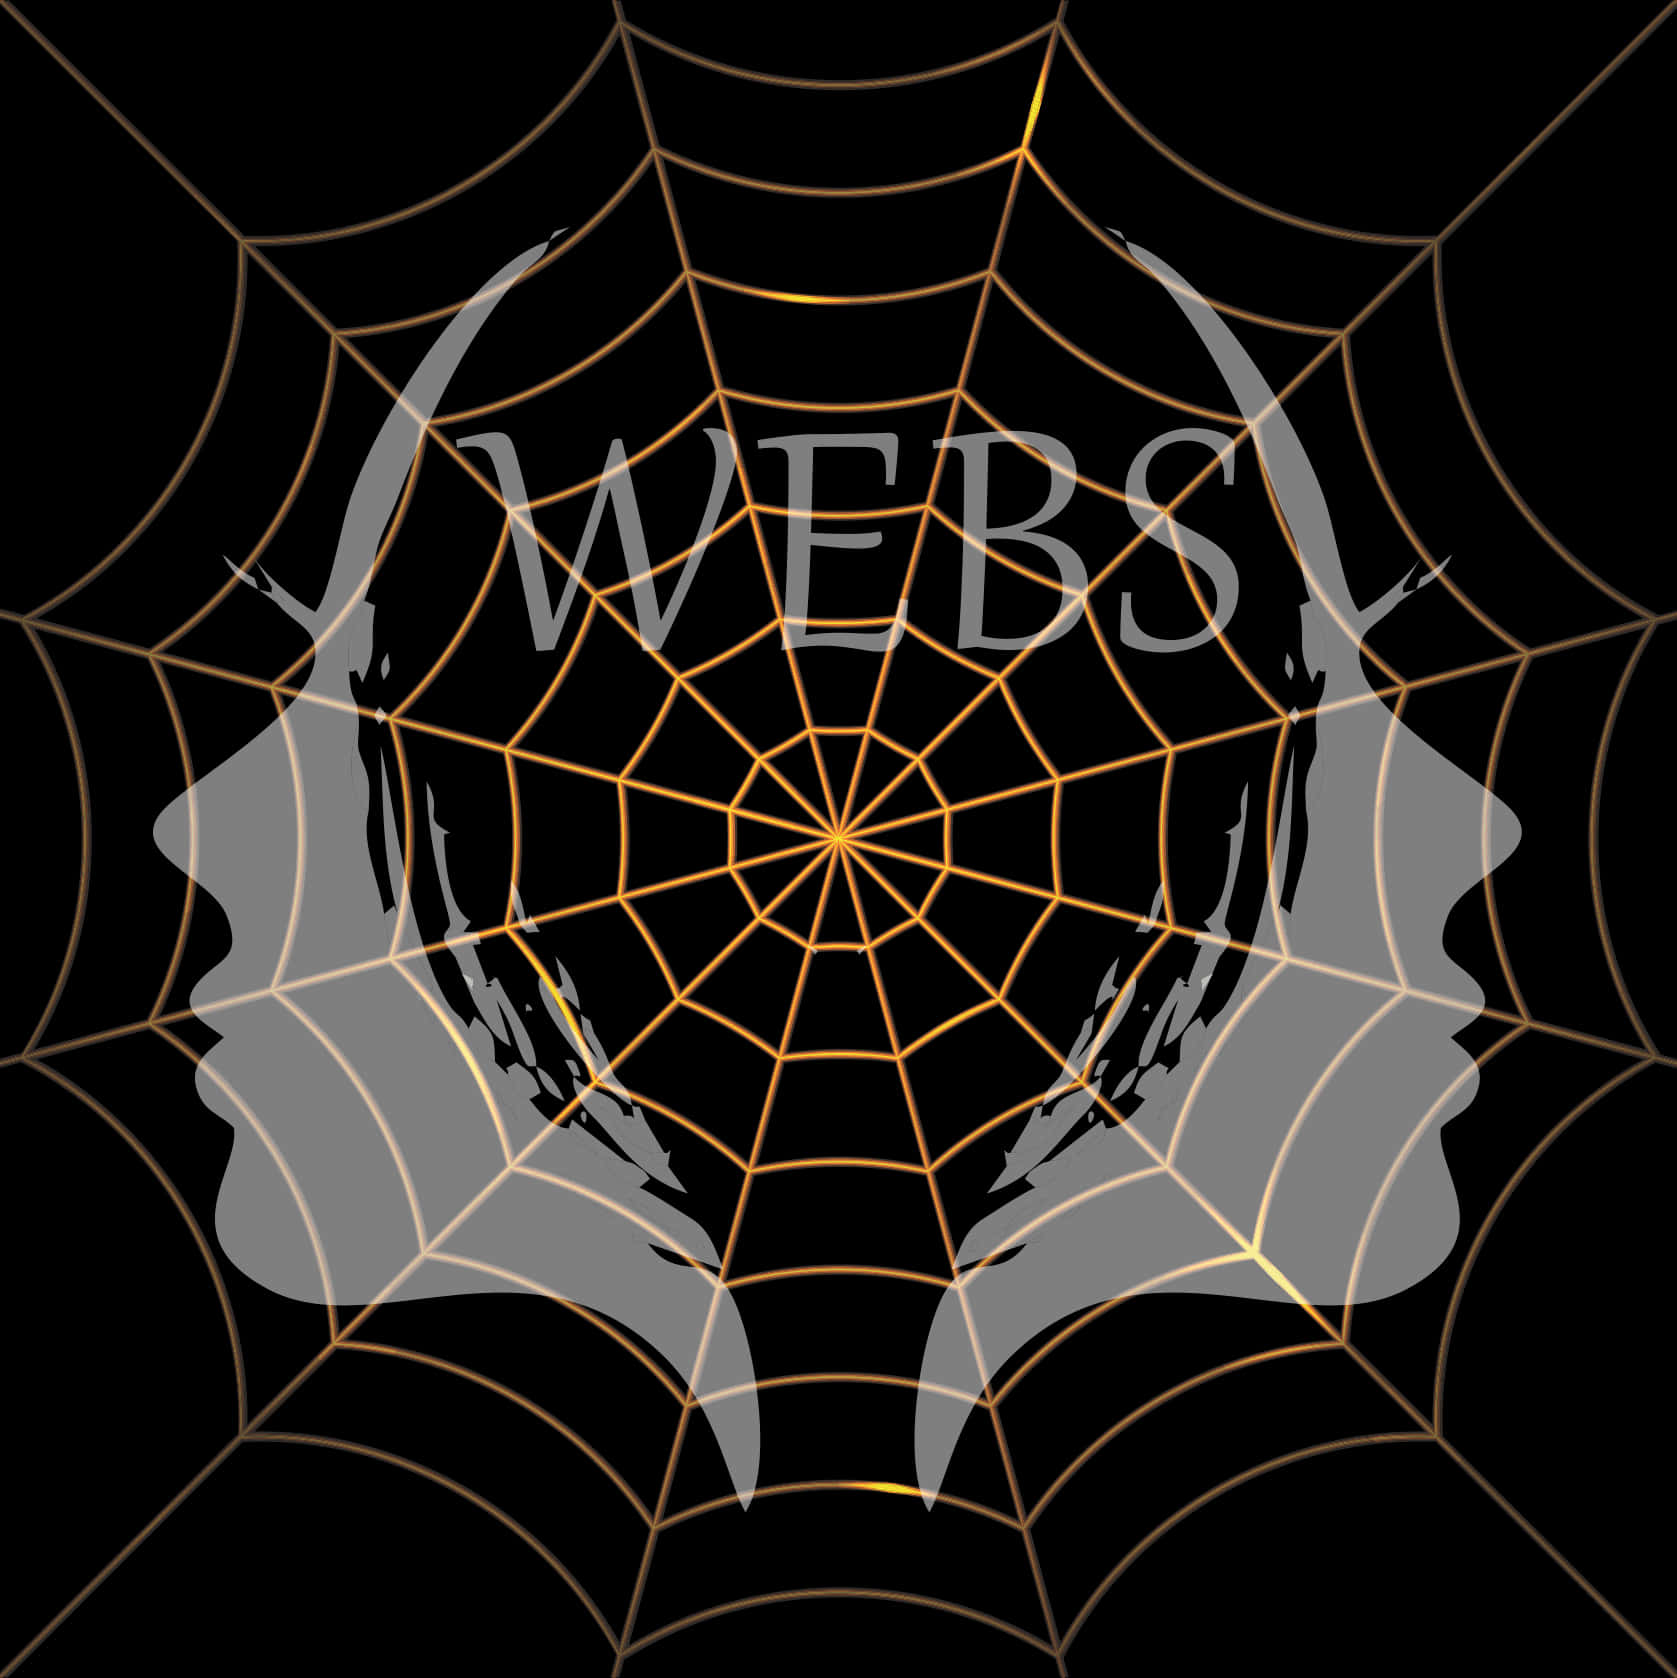 Spider Web Artistic Design